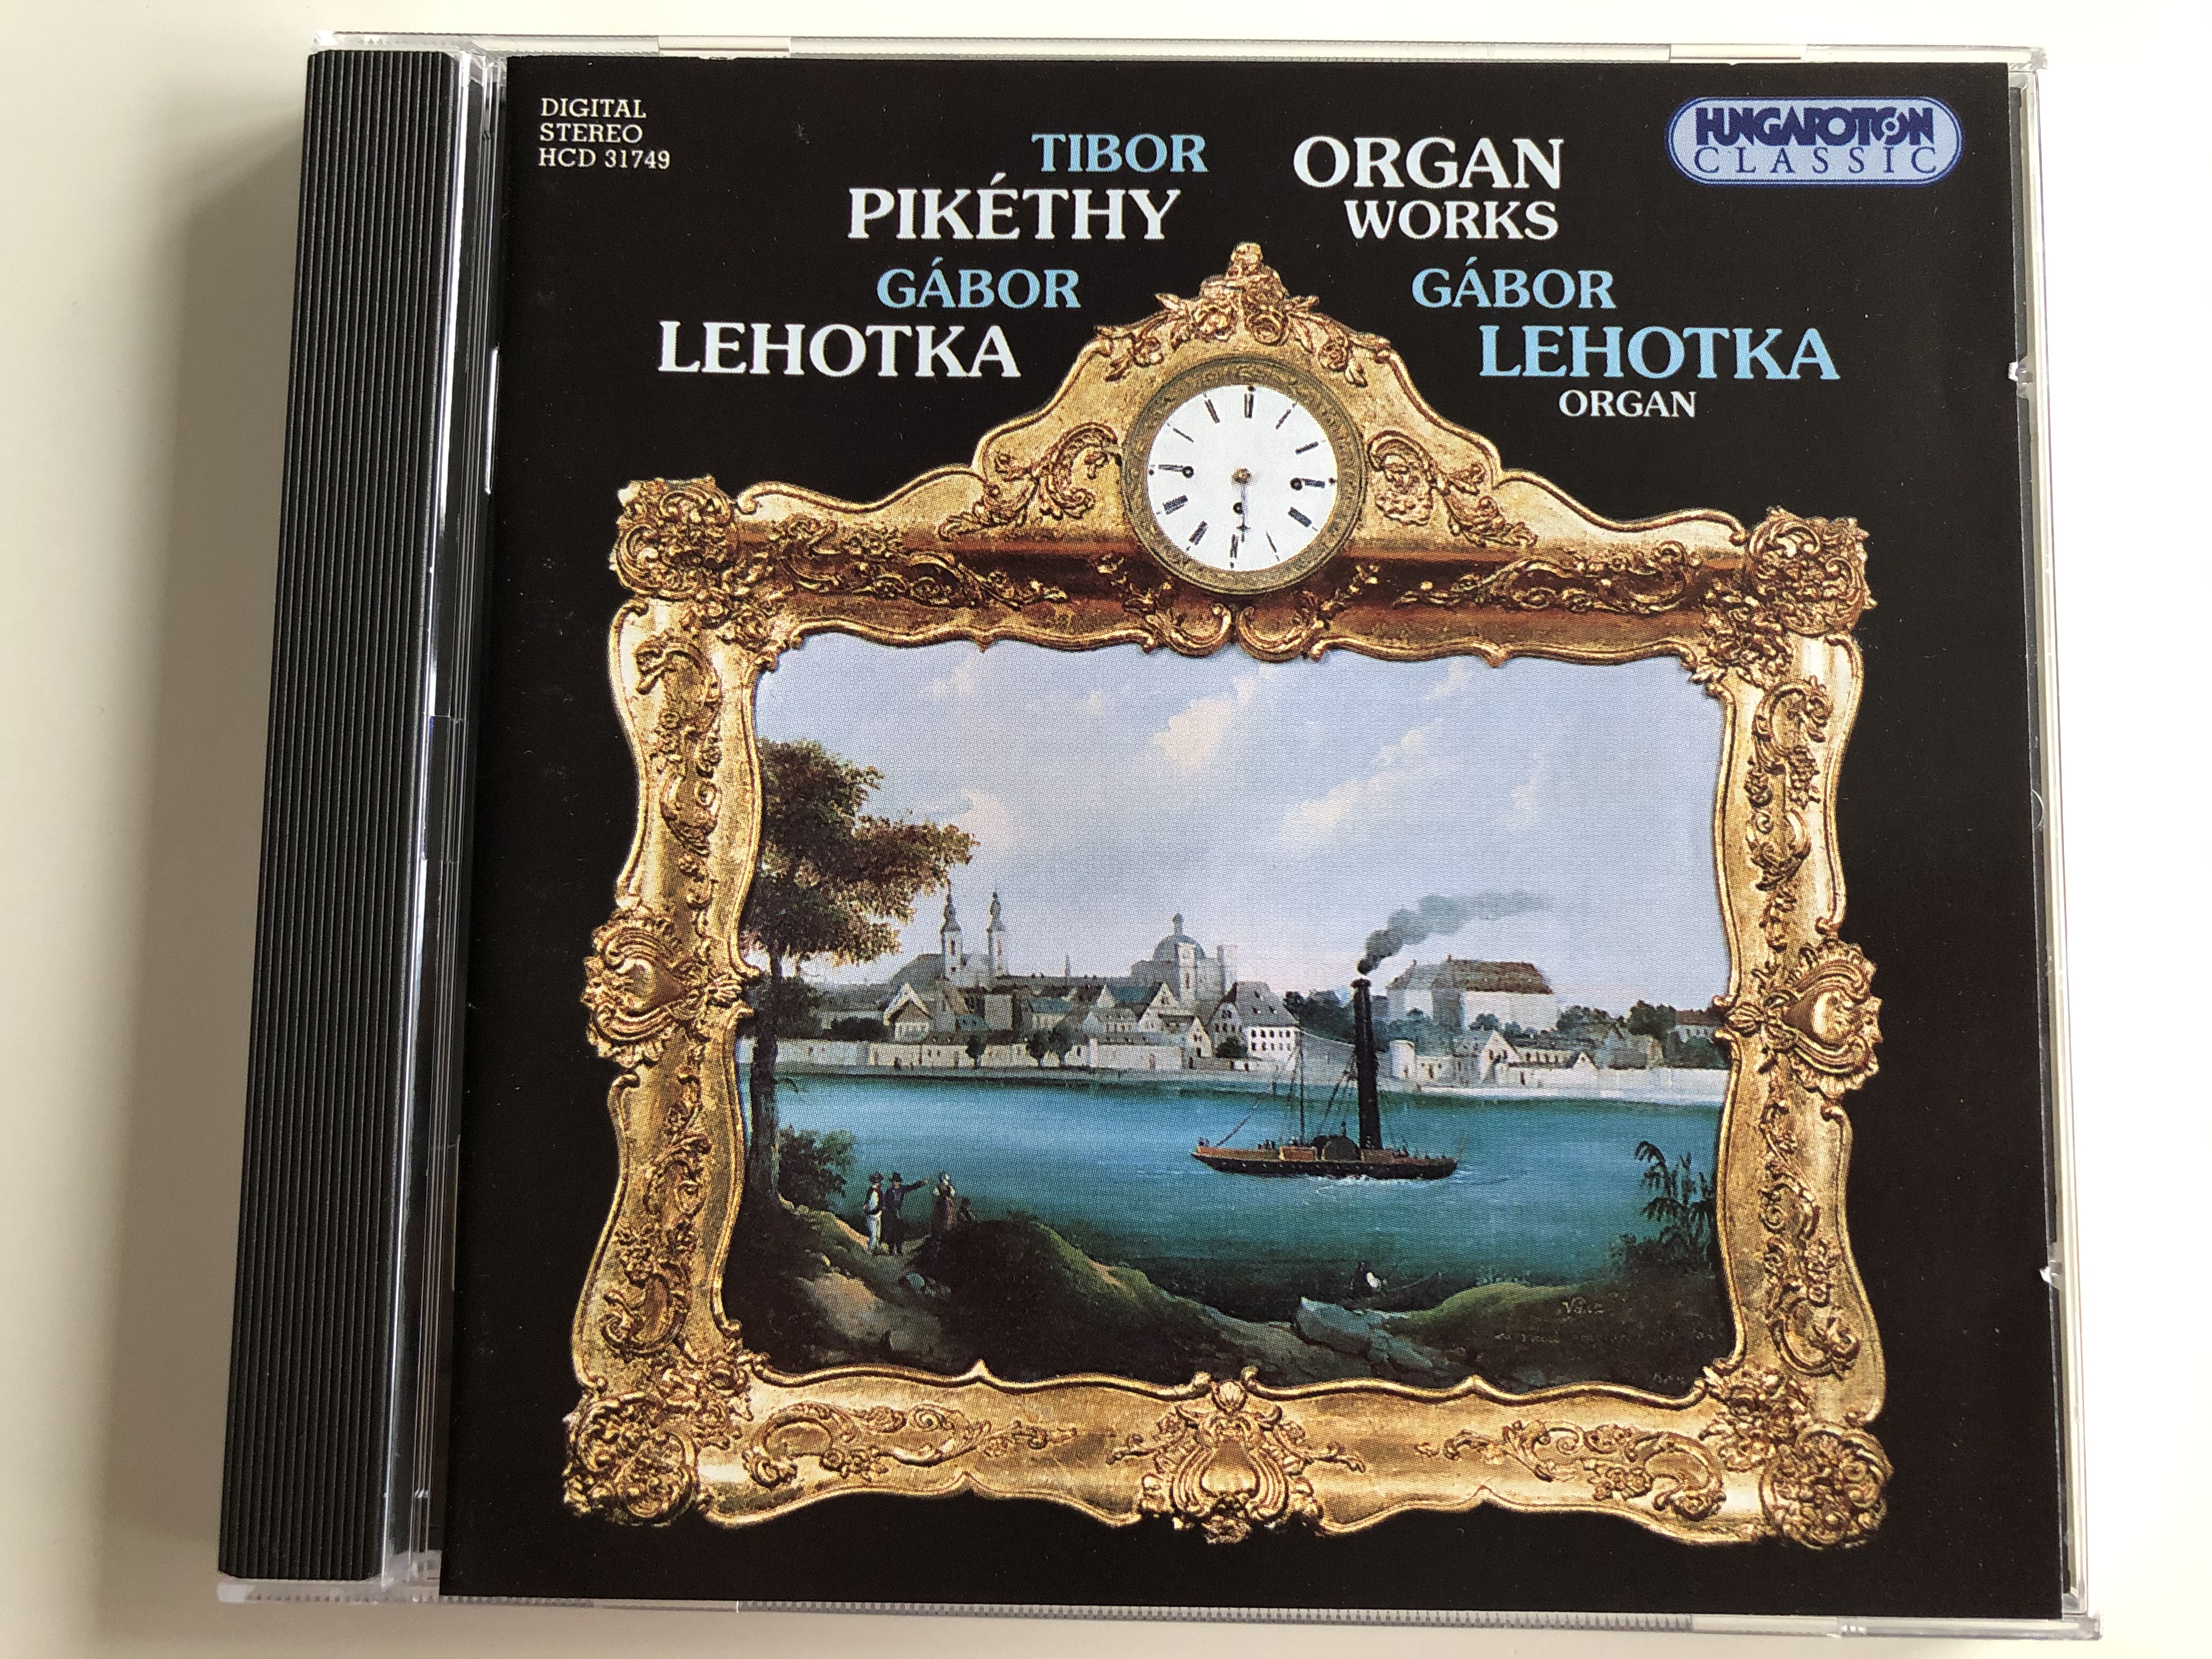 tibor-pik-thy-g-bor-lehotka-organ-works-hungaroton-classic-audio-cd-1997-stereo-hcd-31749-1-.jpg